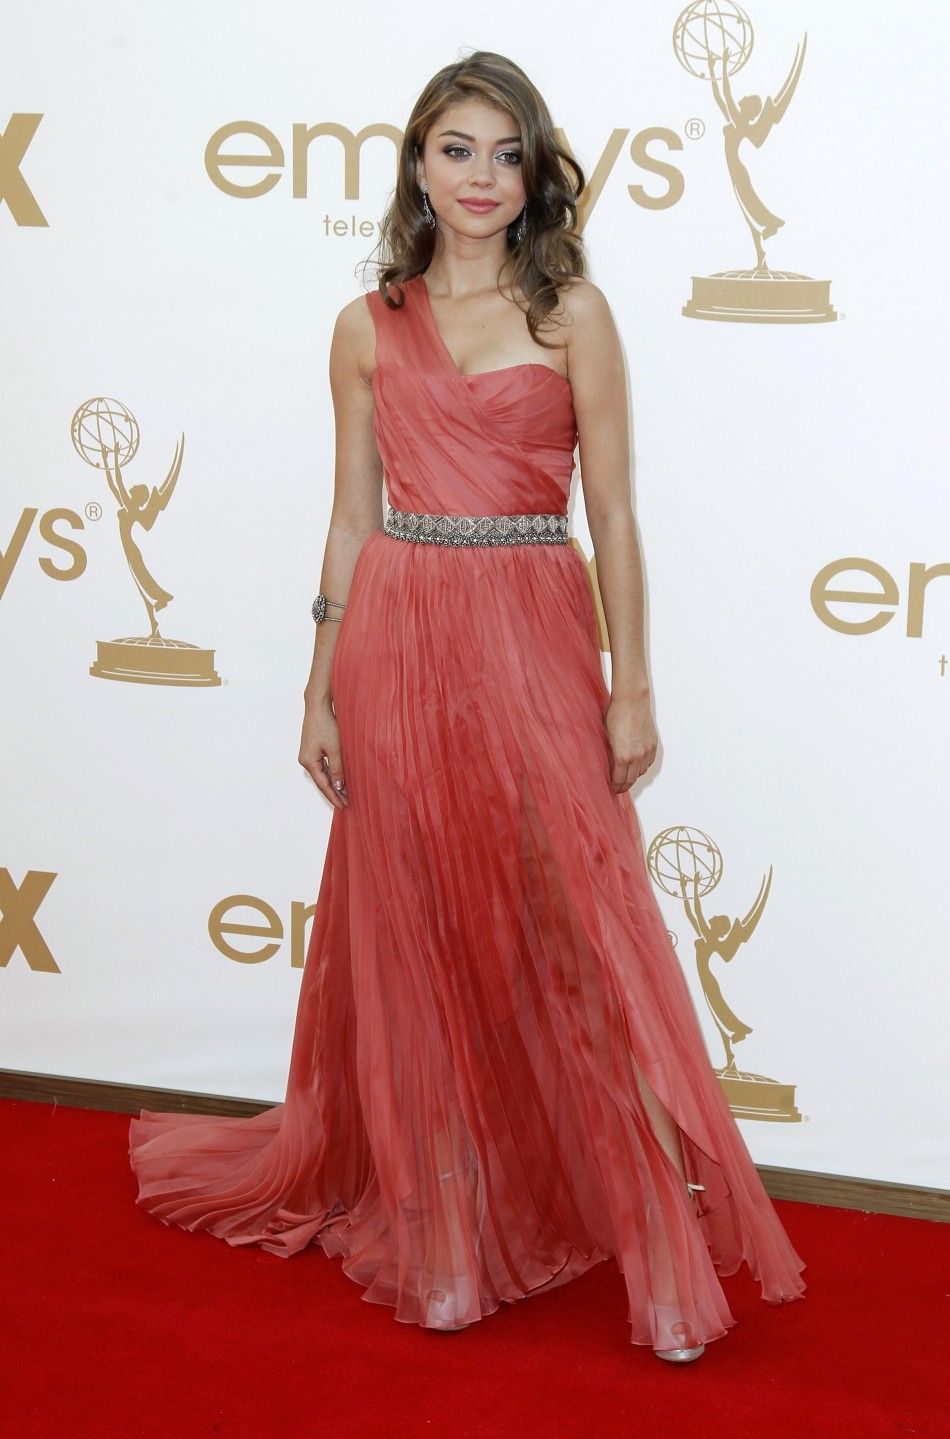 Emmy Awards 2011 Stunning Celebrities in Ravishing Red.